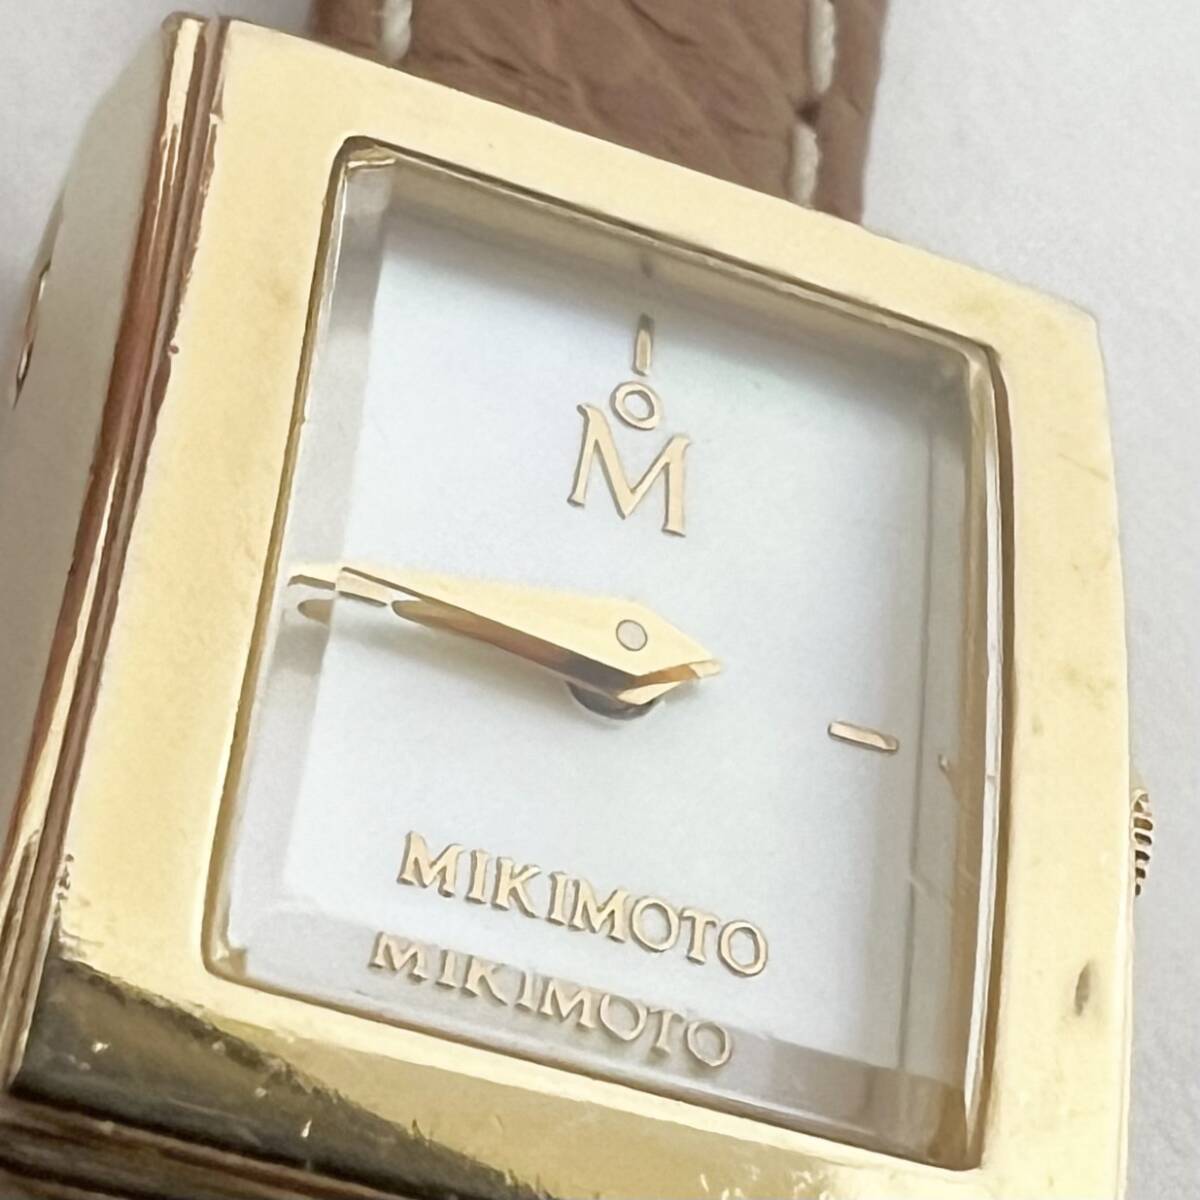 16085/ MIKIMOTO Mikimoto ремень часы кожа Brown наручные часы с футляром 